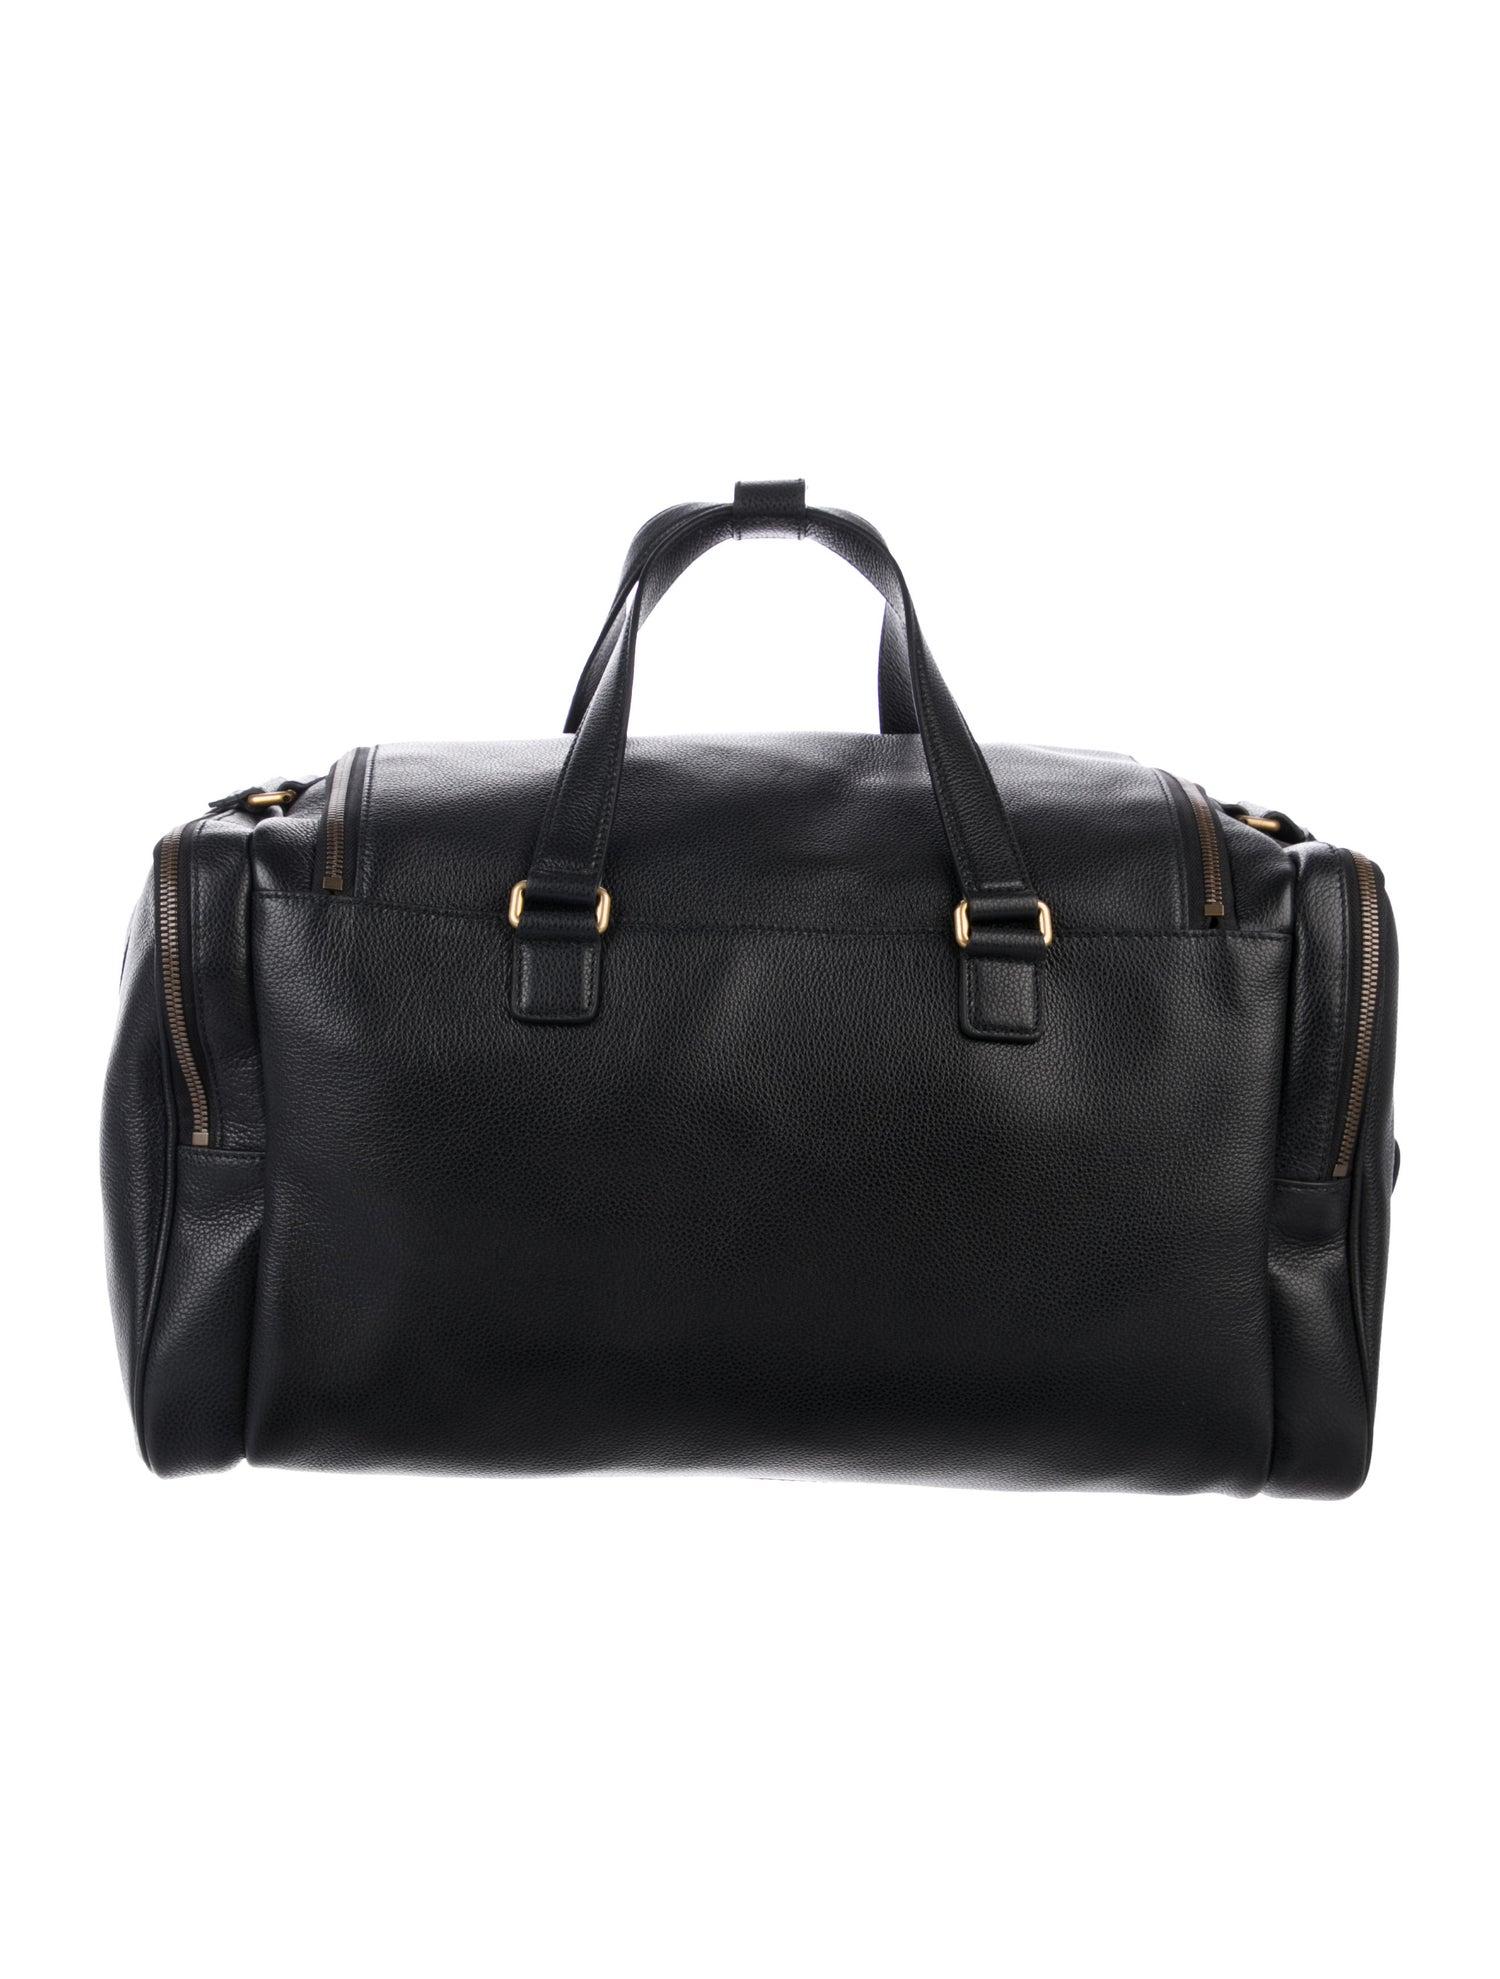 Women's Gucci NEW Black Leather Logo Gold Duffle Weekender Tote Top Handle Satchel Bag